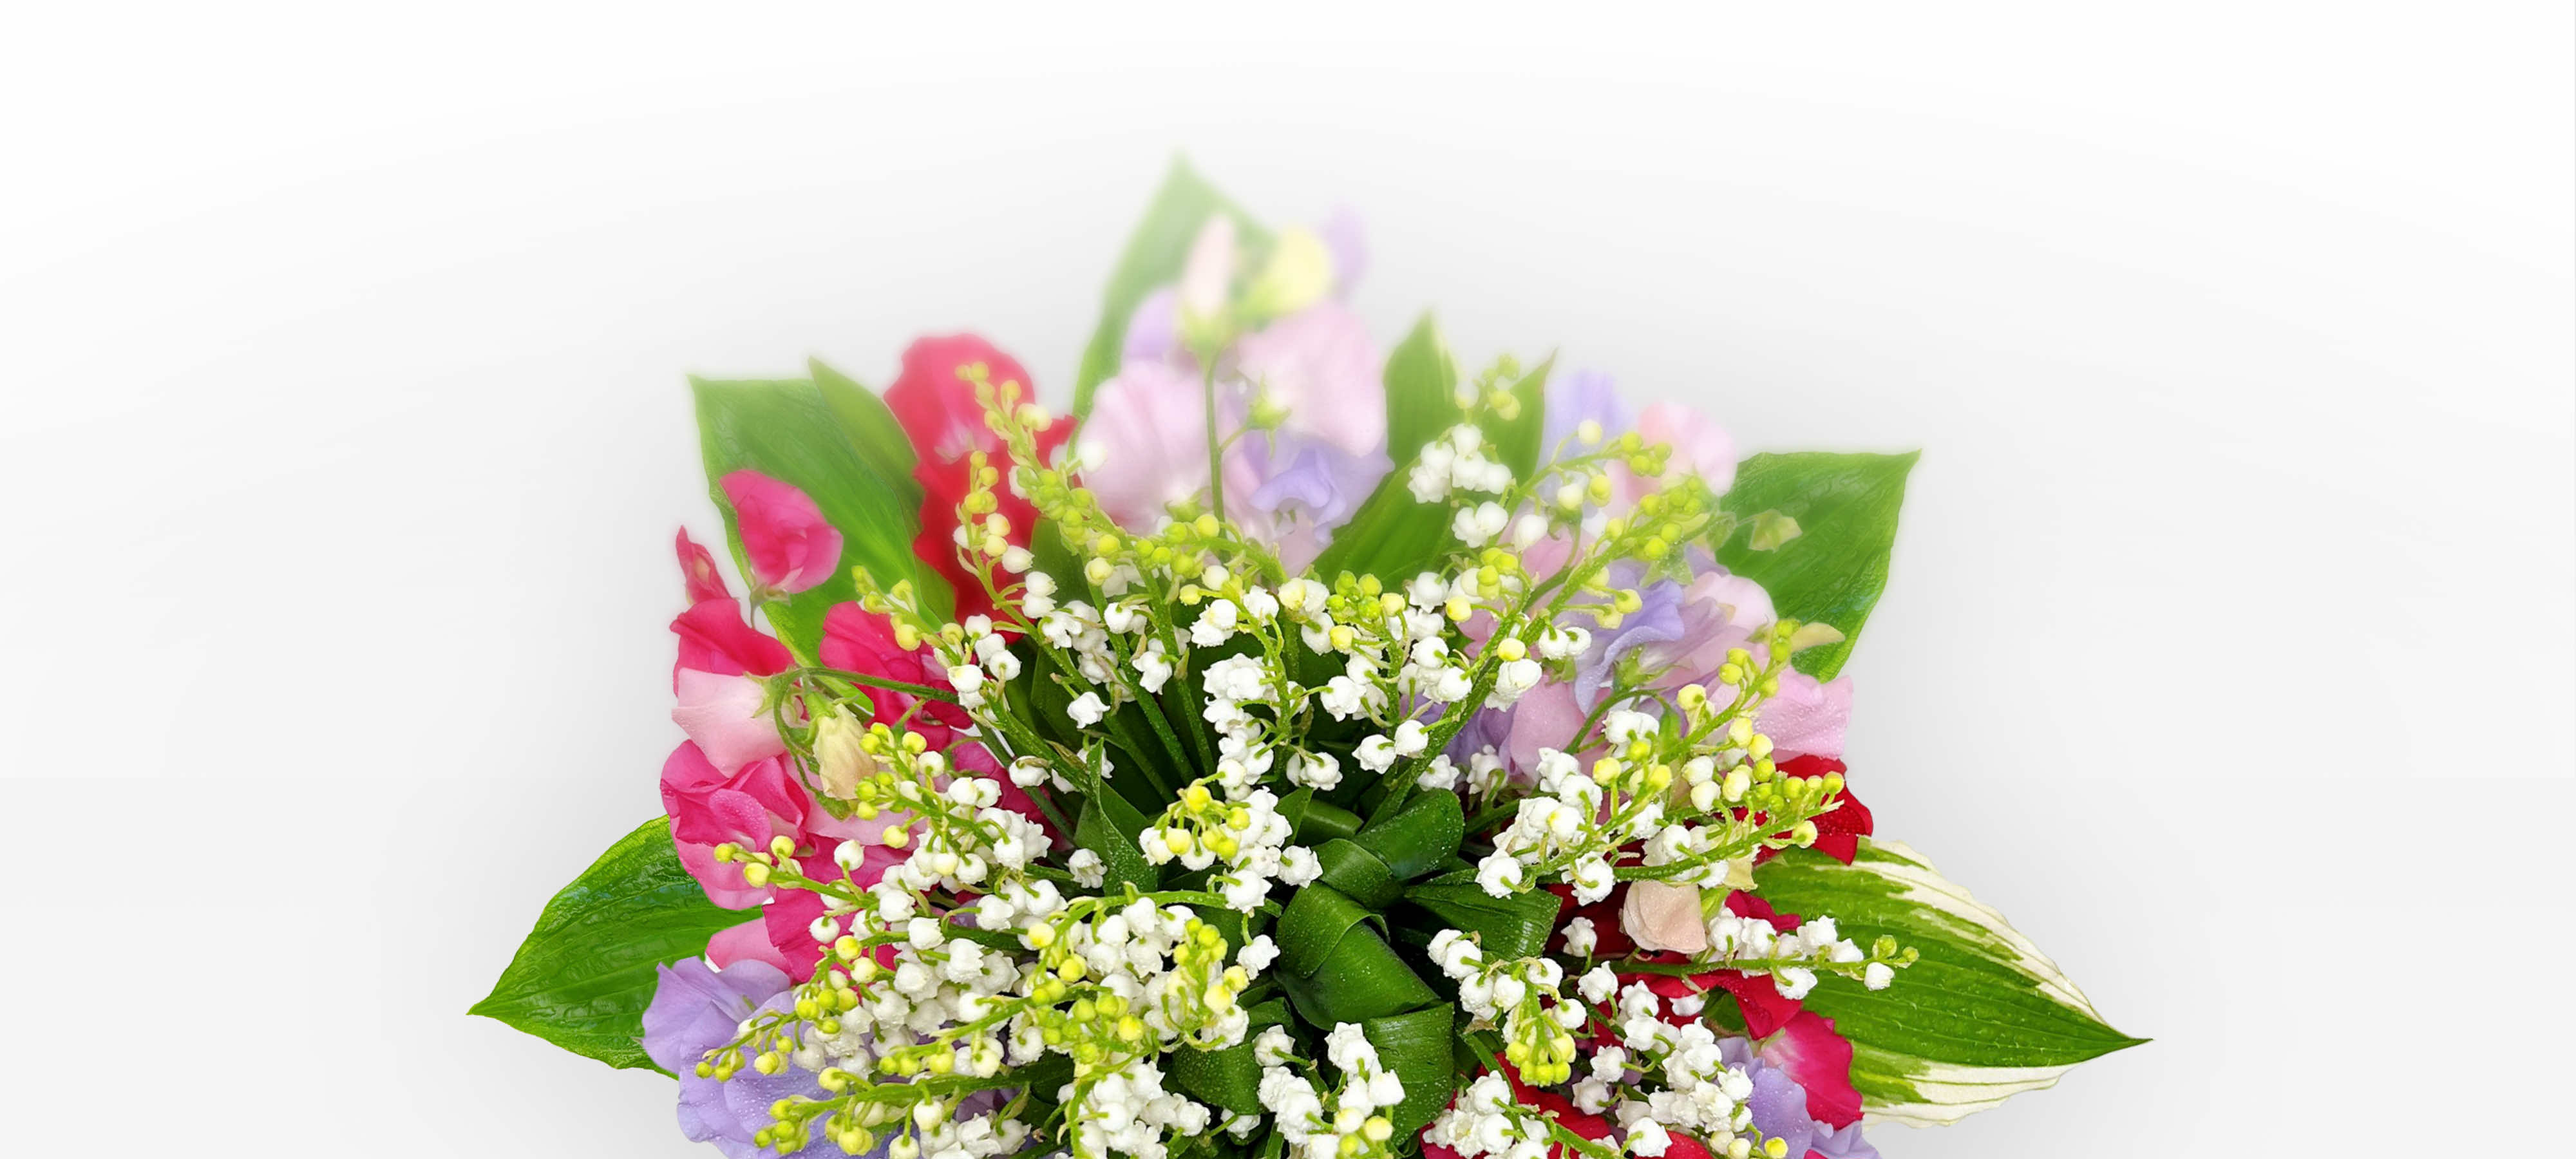 A bouquet with delicate fragrances